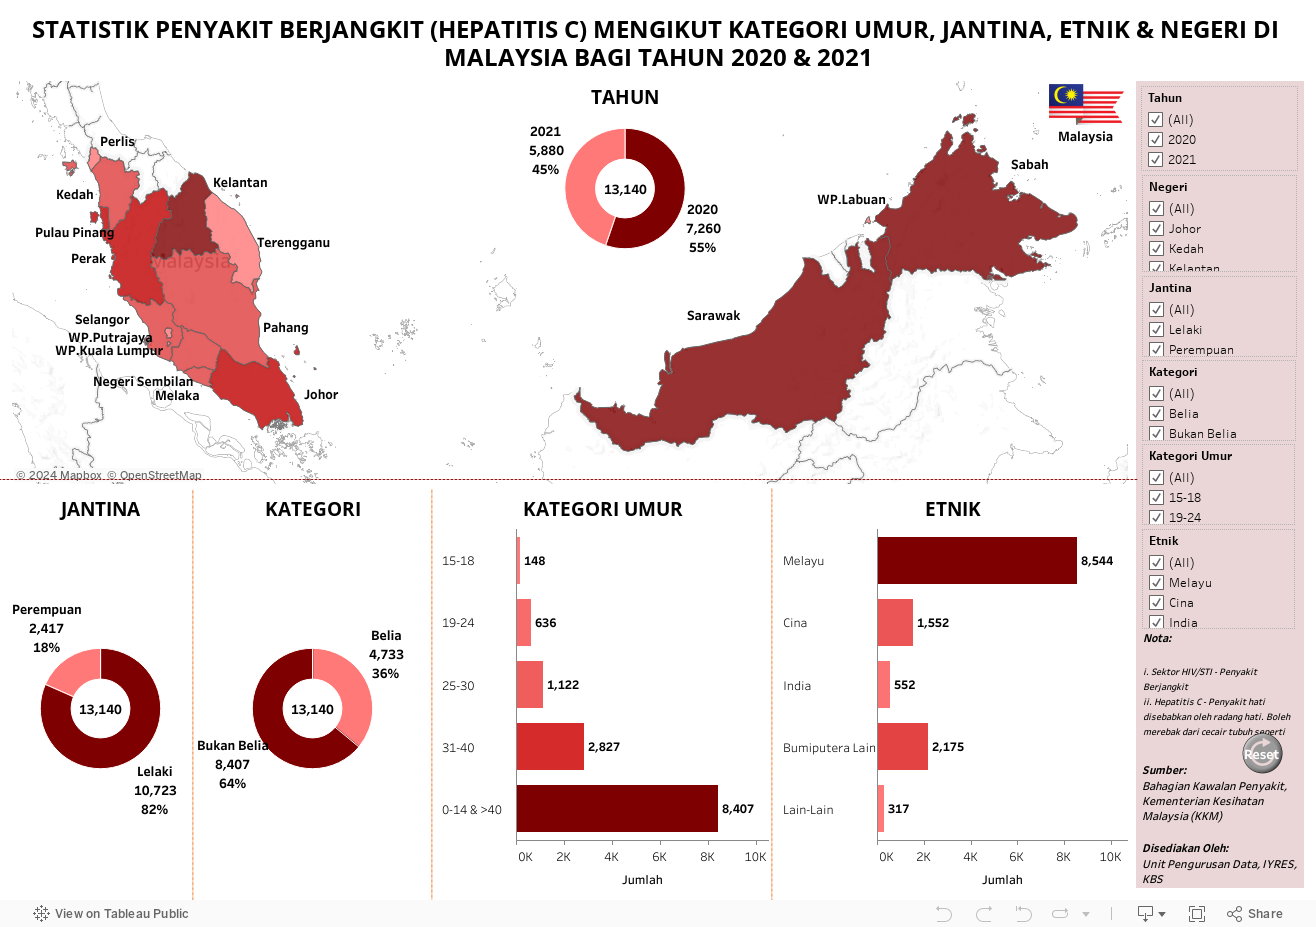 STATISTIK PENYAKIT BERJANGKIT (HEPATITIS C) MENGIKUT KATEGORI UMUR, JANTINA, ETNIK & NEGERI DI MALAYSIA BAGI TAHUN 2020 & 2021 